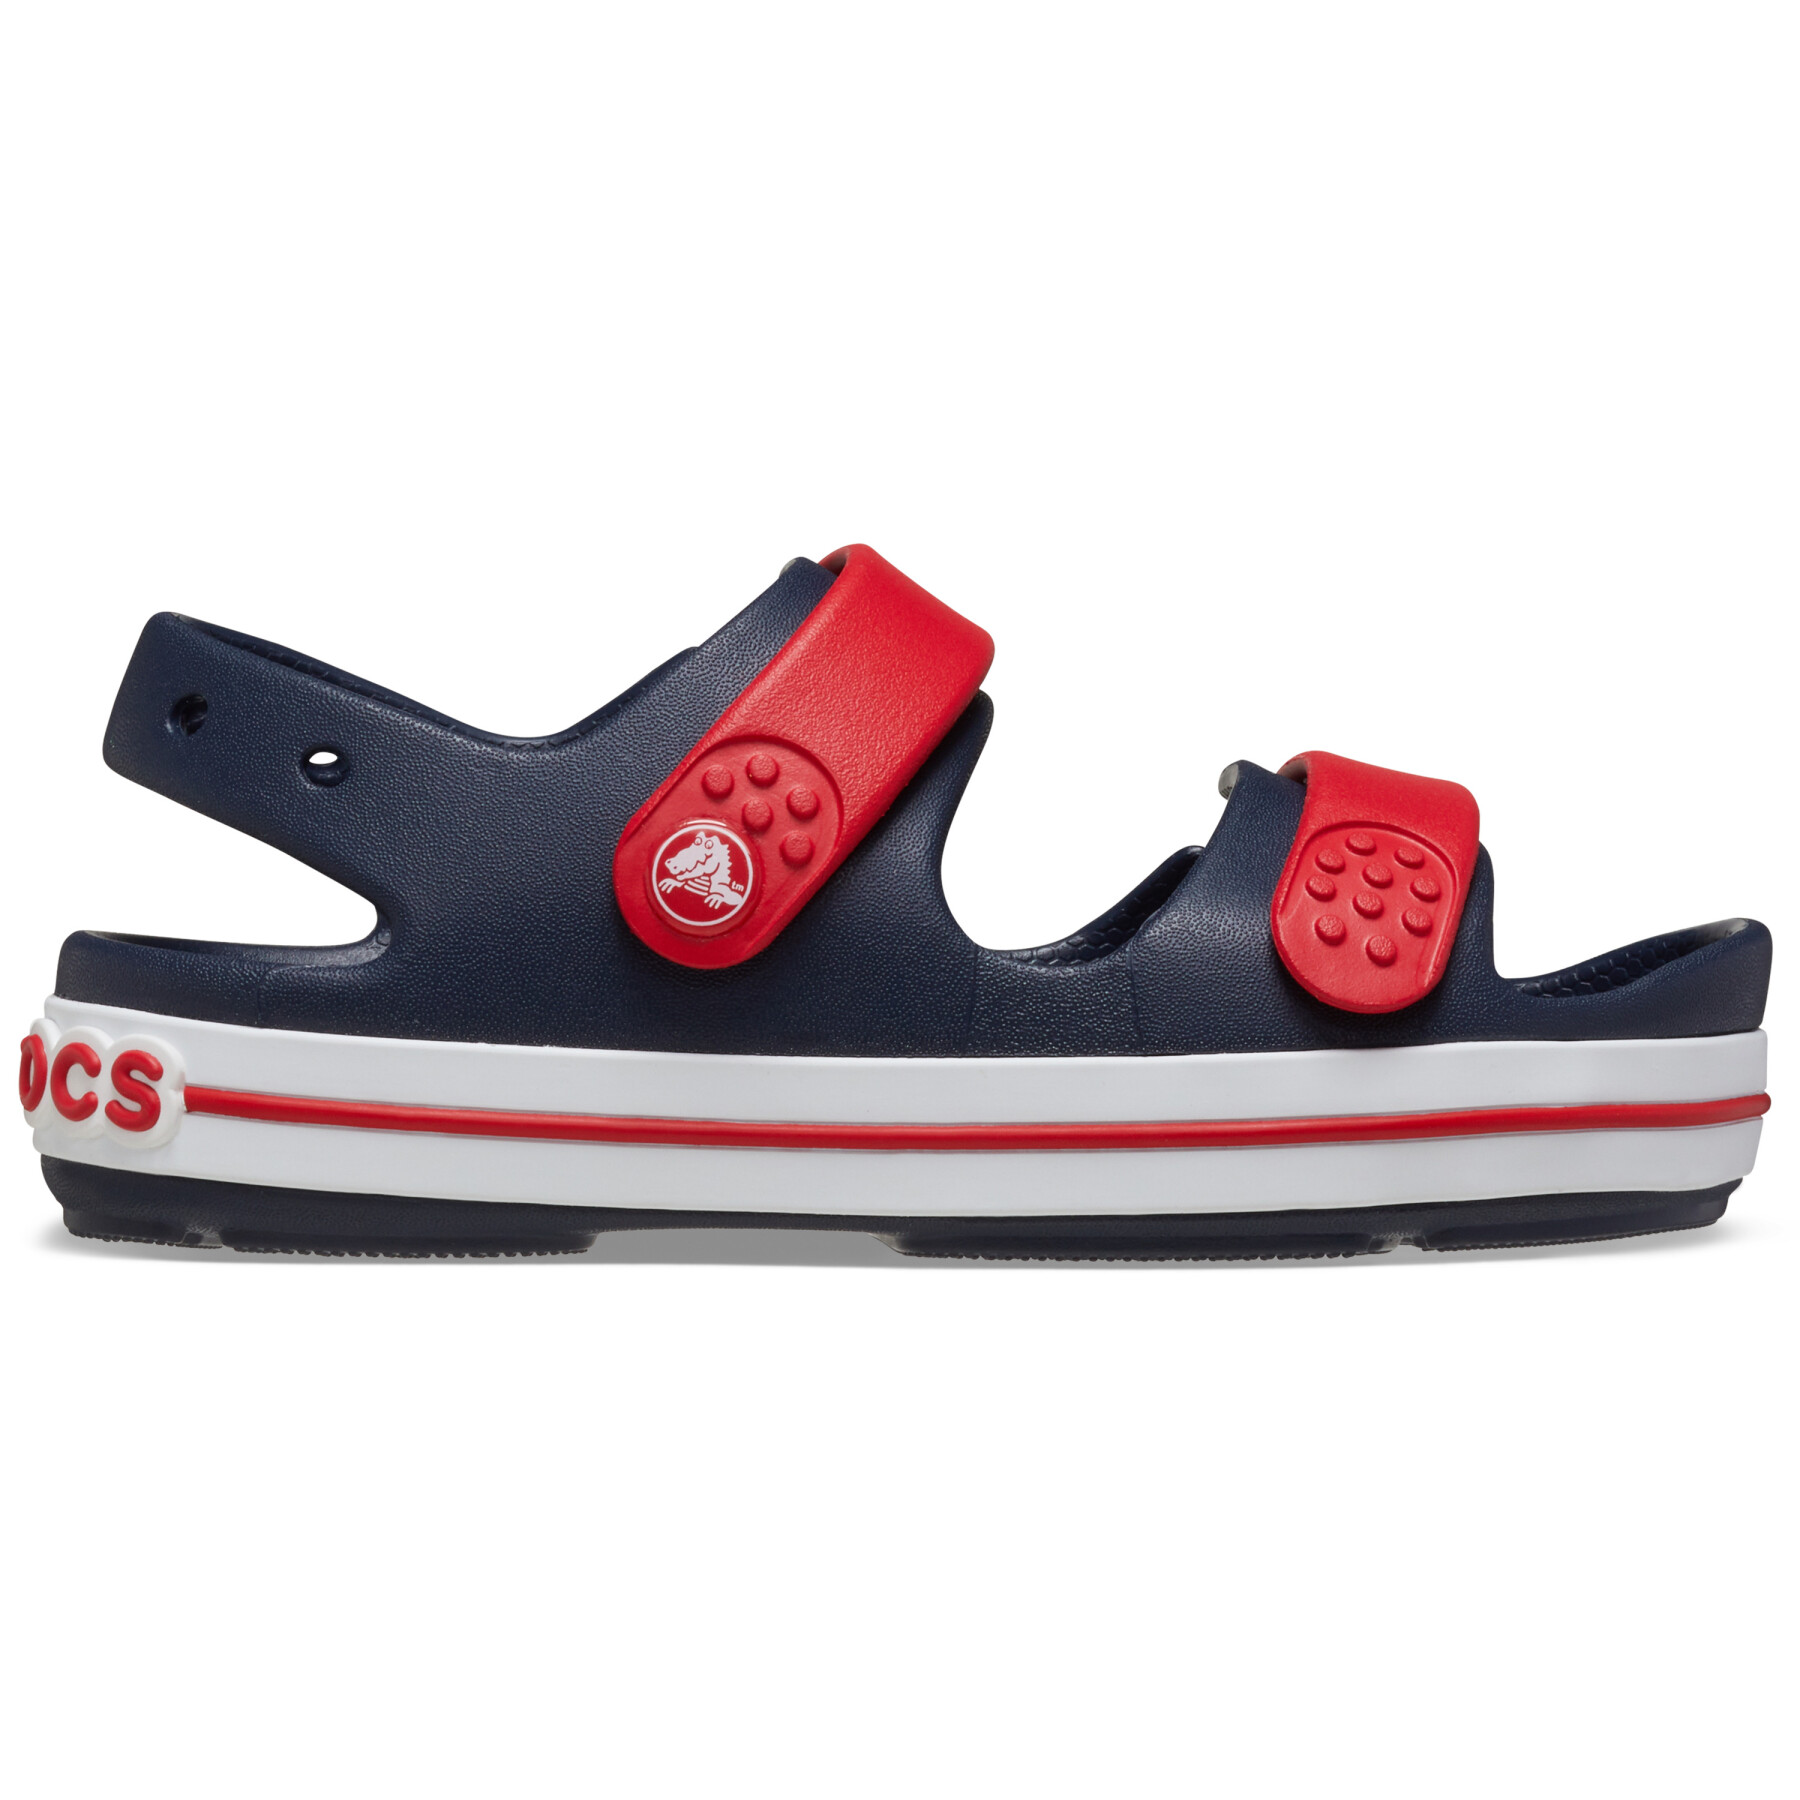 Children's sandals Crocs Crocband Cruiser